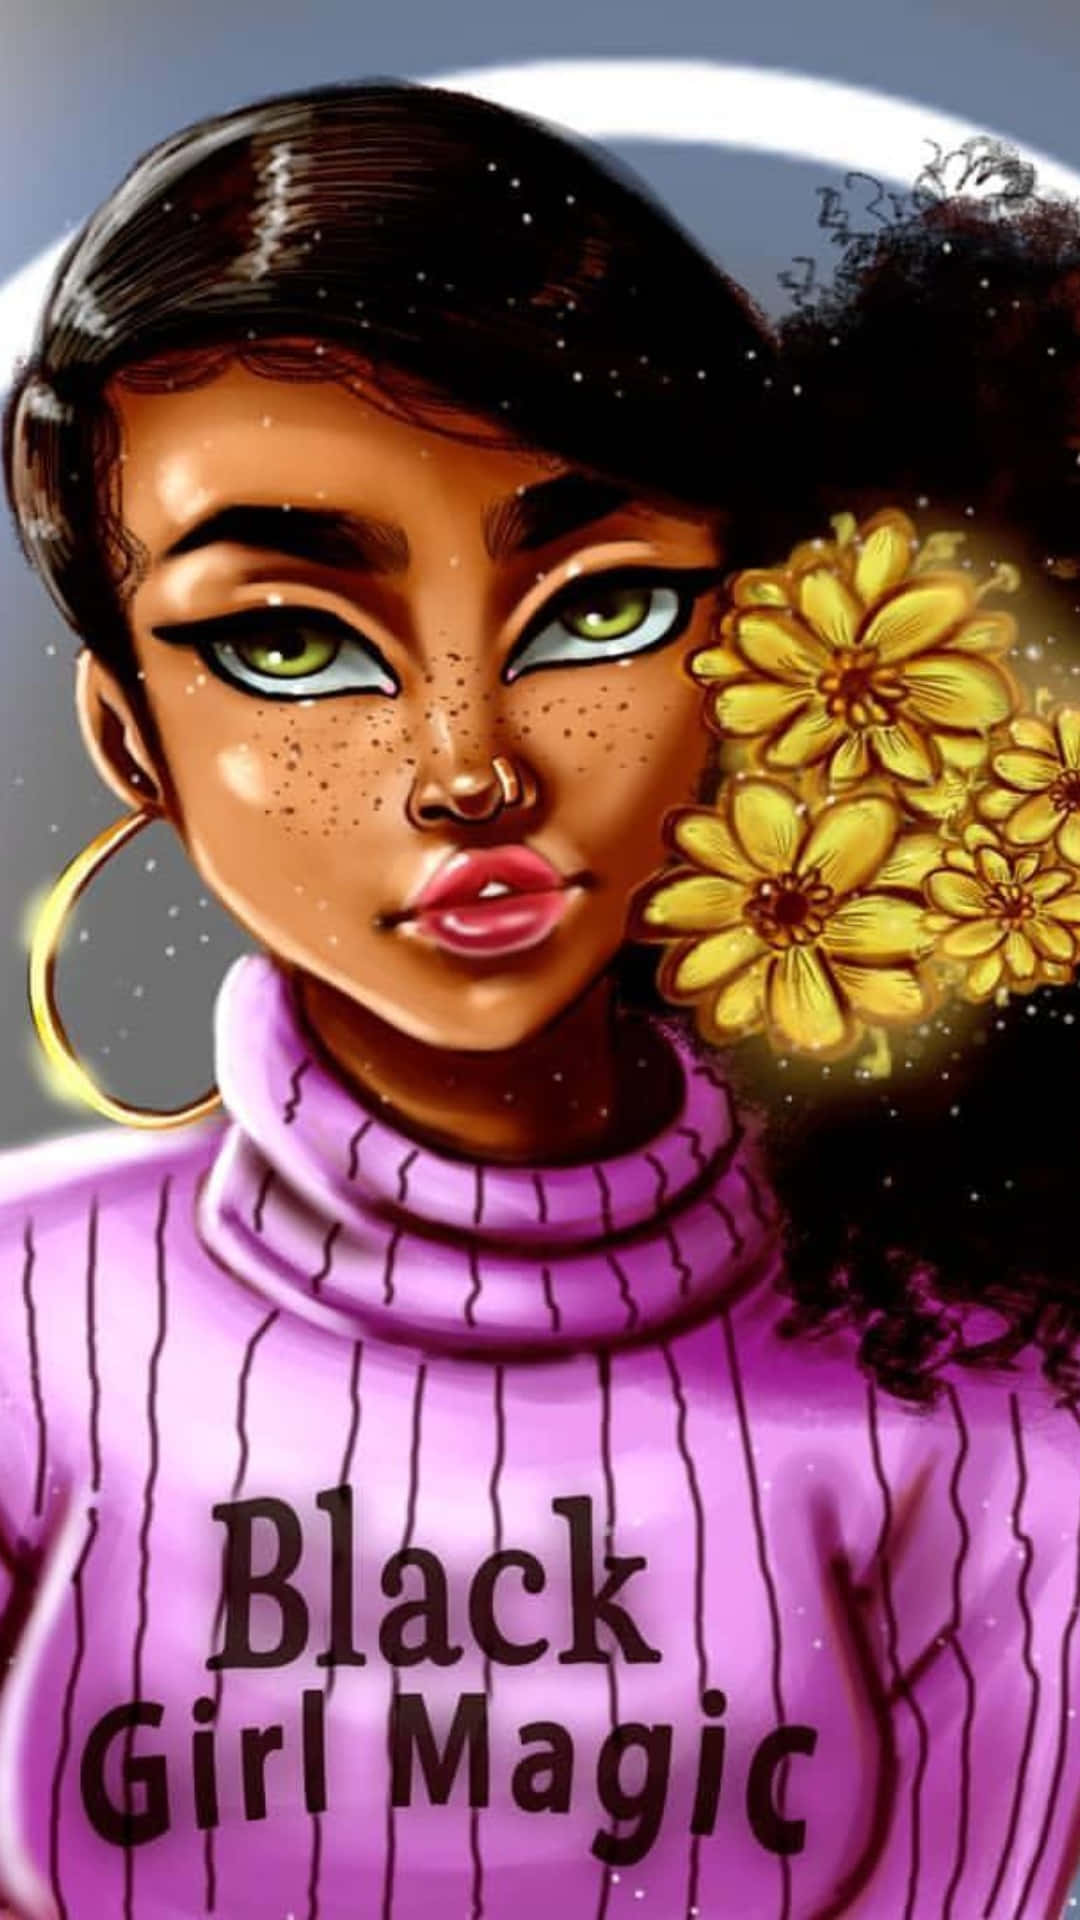 Animated Black Girl Magic Illustration Wallpaper